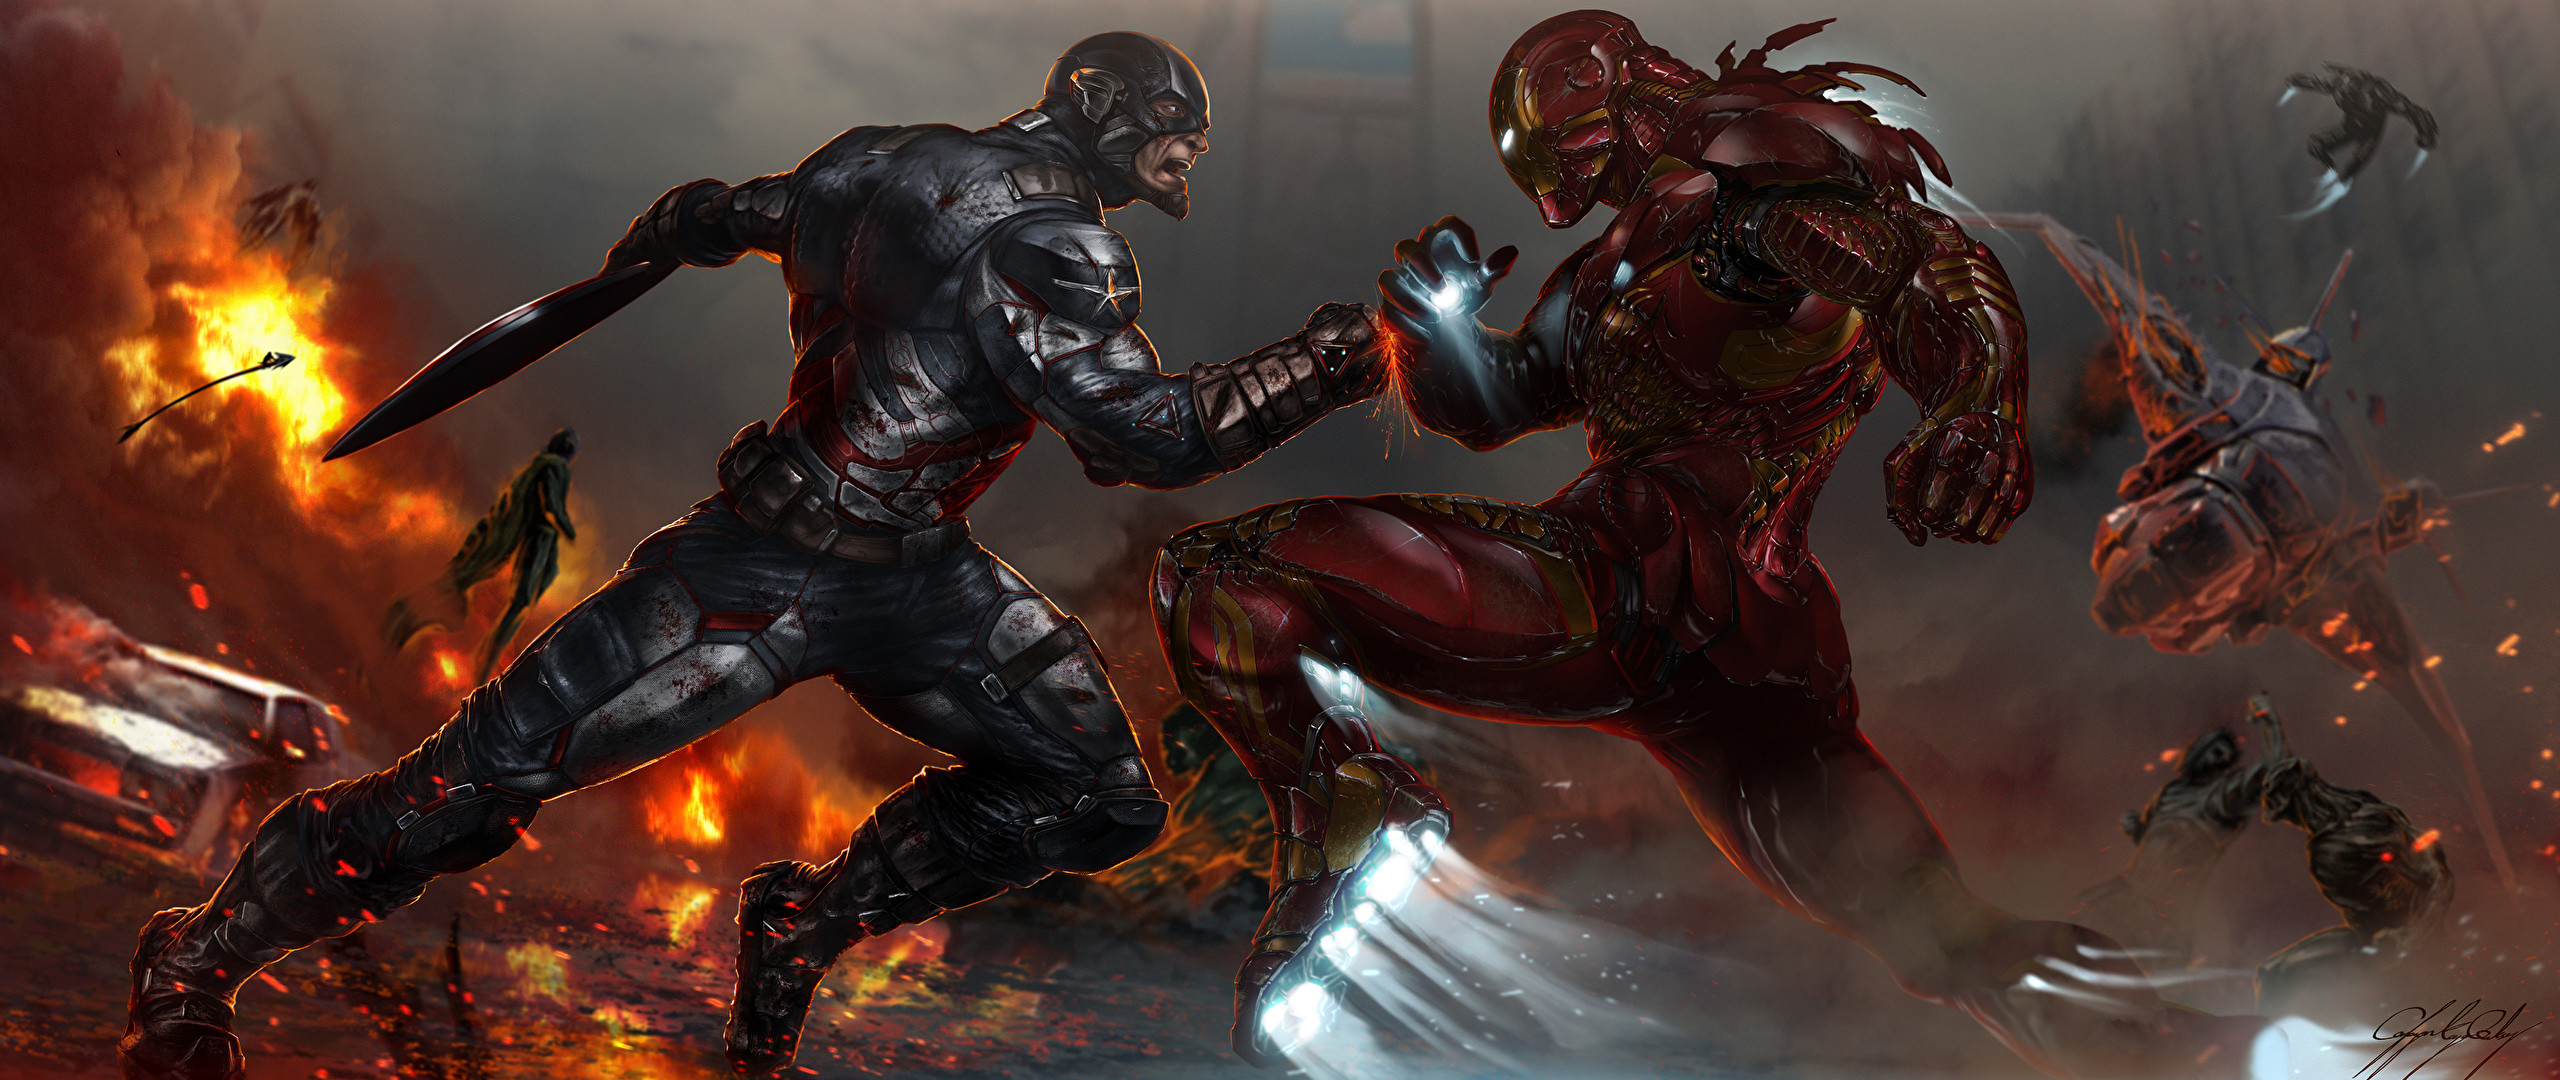 2560x1080 Wallpaper Iron Man hero Captain America: Civil War Battles Steven Rogers  tony stark Fantasy Movies